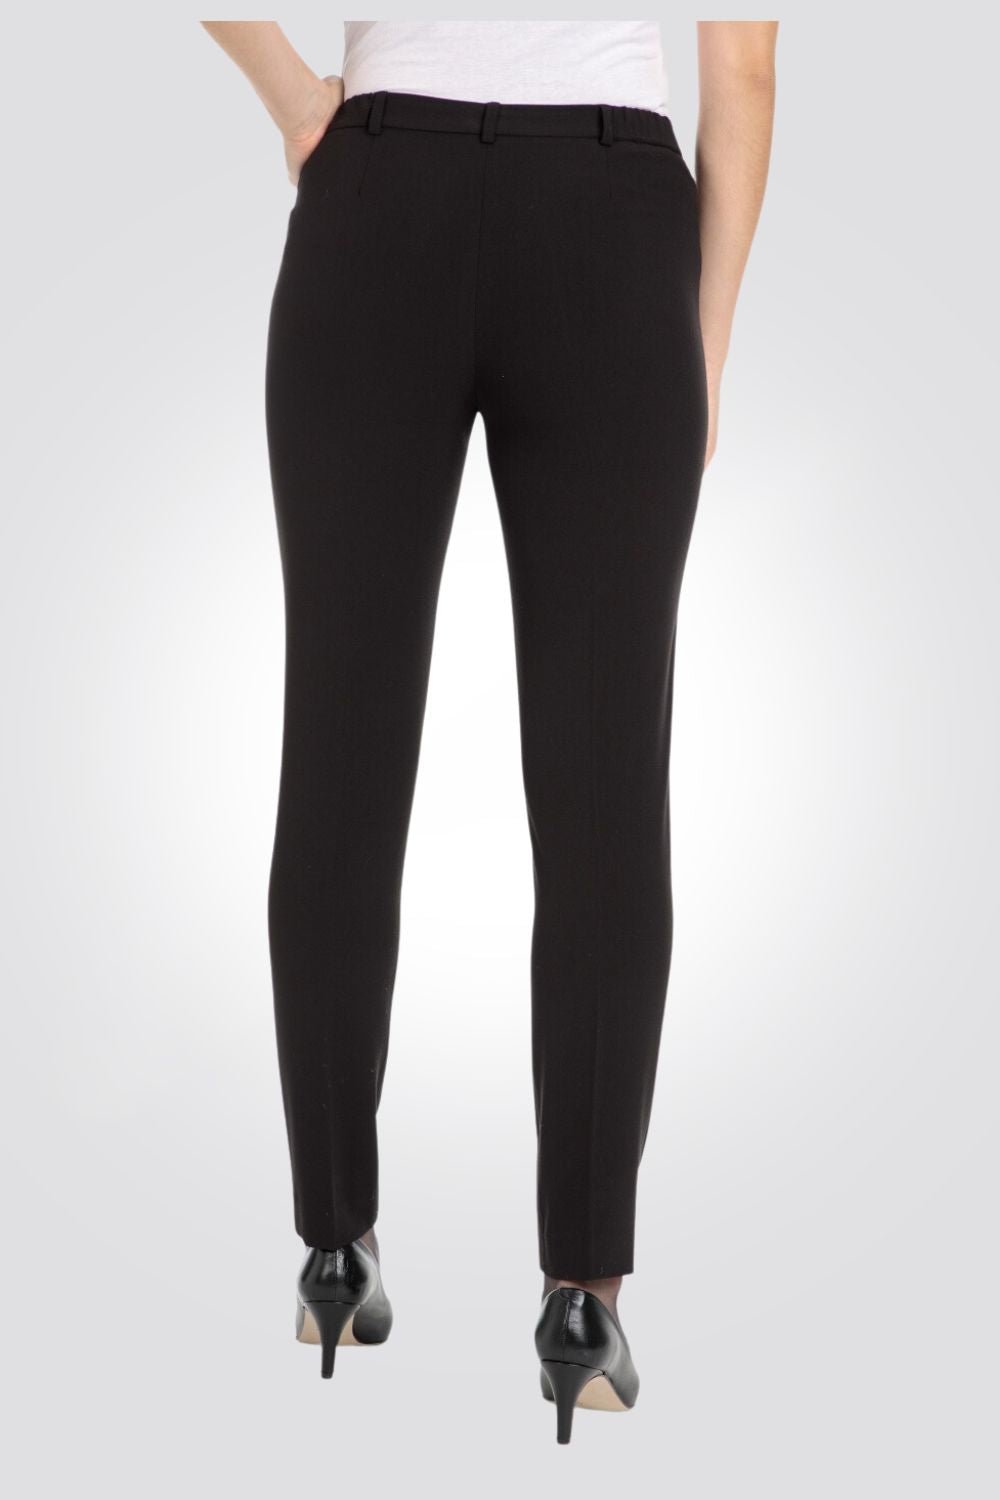 PUNT ROMA - מכנס נשים בצבע שחור - MASHBIR//365